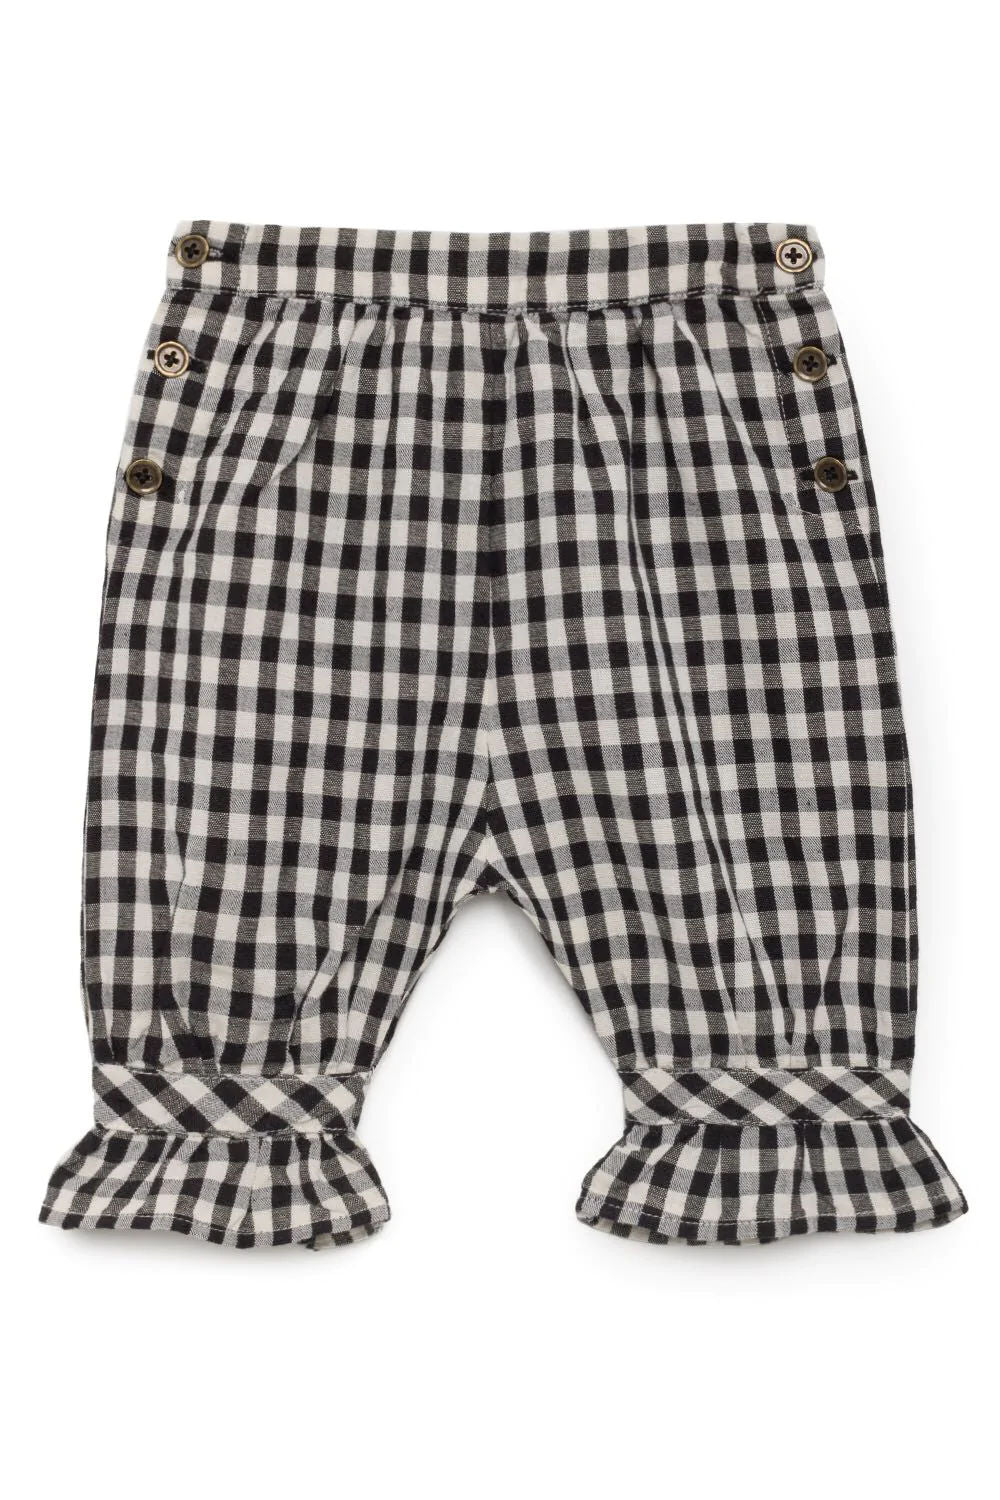 Baby Horizon Dress with Checkered Pants Set